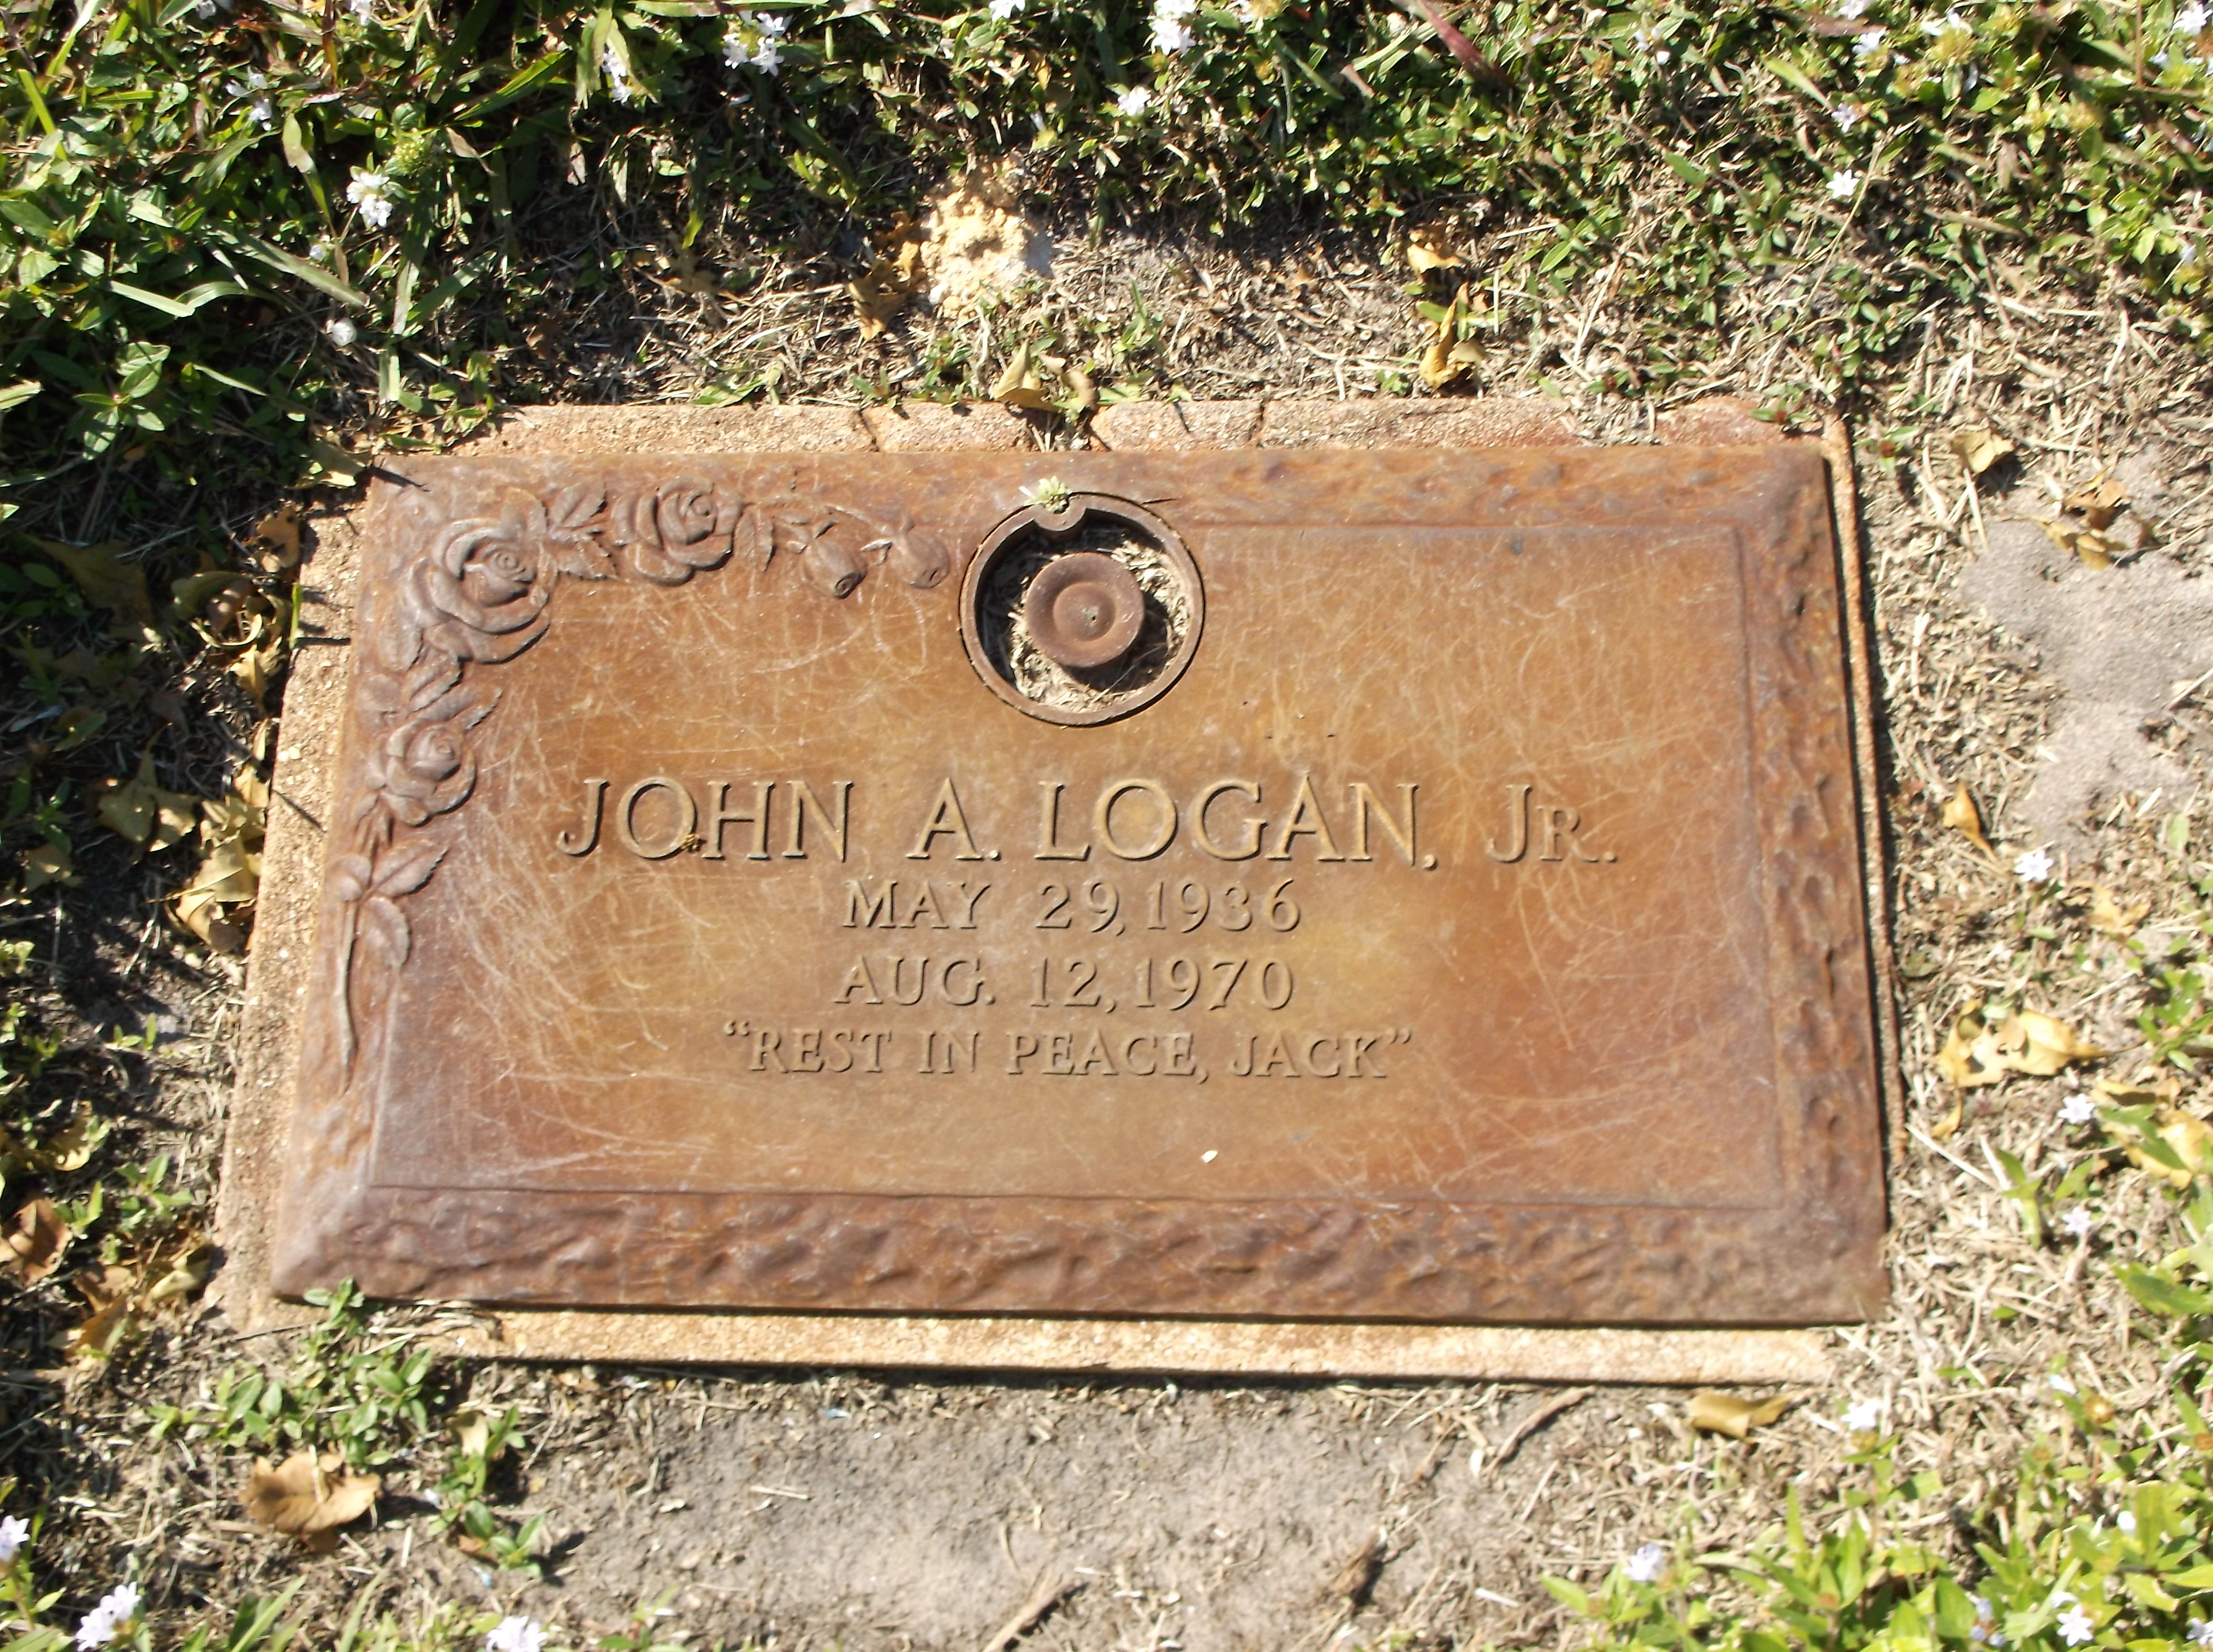 John A Logan, Jr